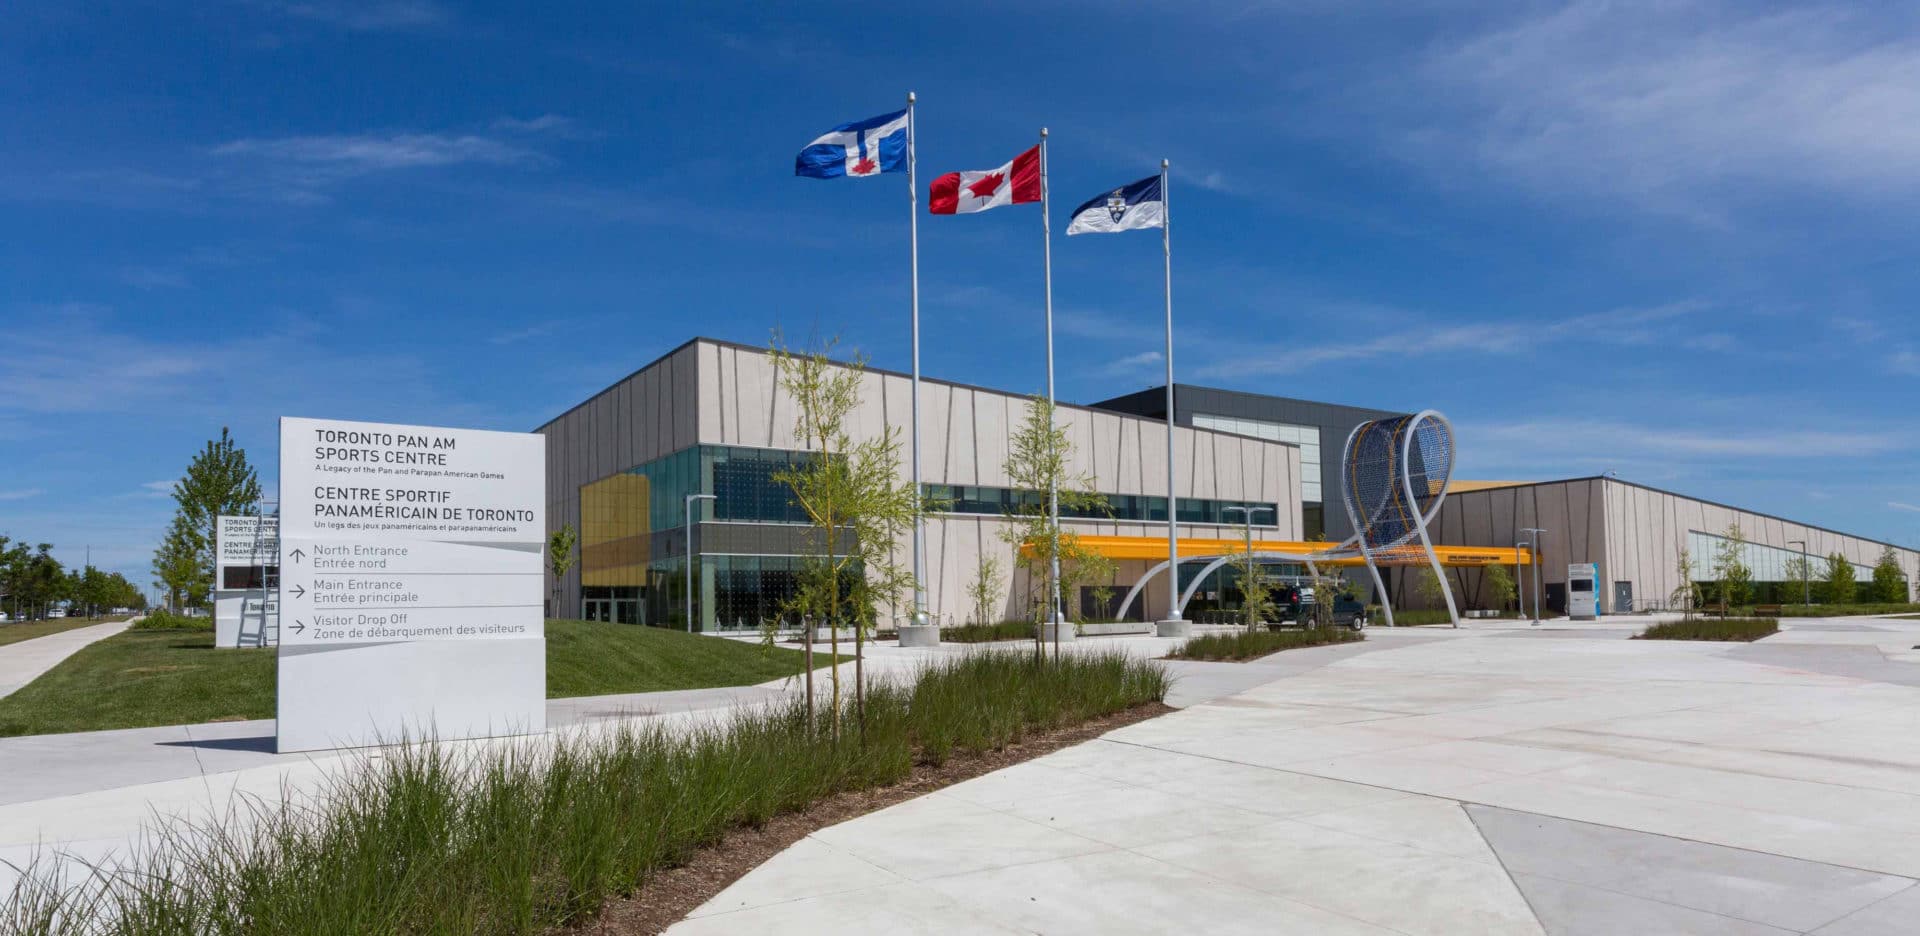 Exterior shot of the Toronto Pan Am Sports Centre